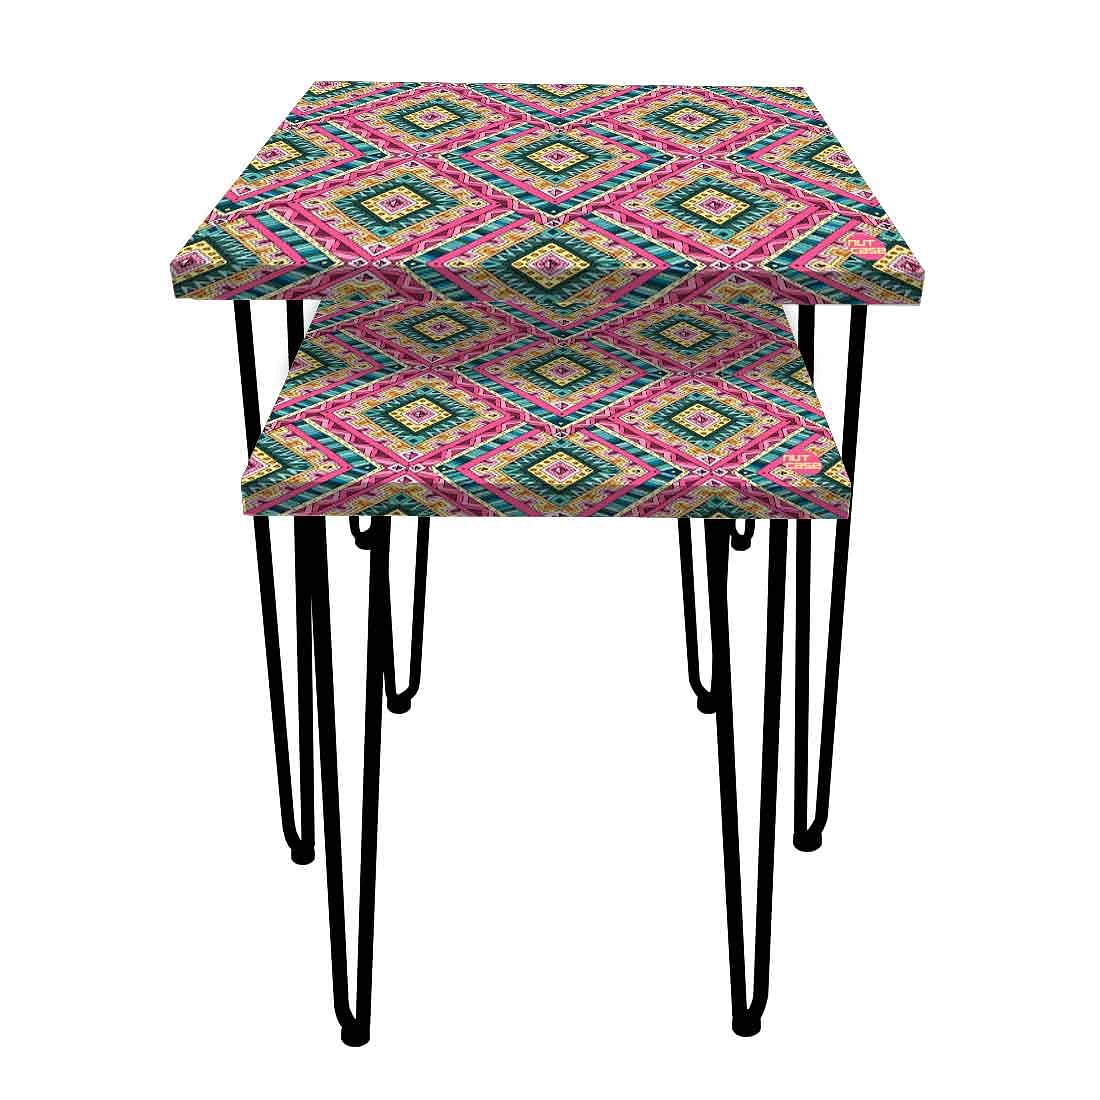 Designer Nesting Tables for Sofa Side Table House Set of 2 - Indian Ethnic  Pink Nutcase